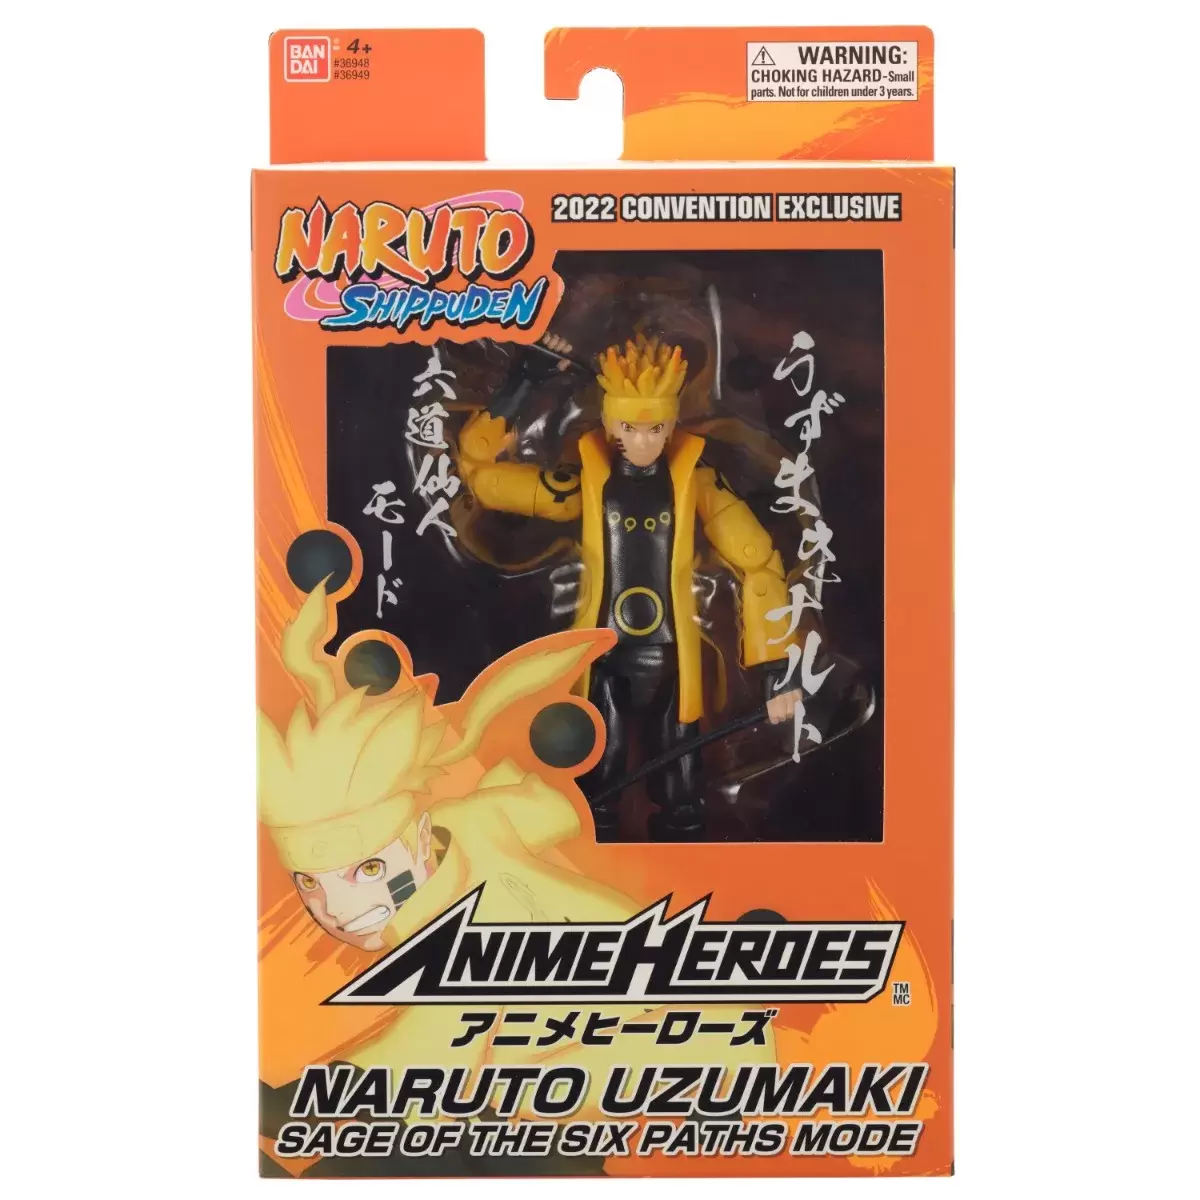 Naruto Shippuden - Uzumaki Naruto 2022 Convention Exclusive - Anime Heroes  - Bandai action figure